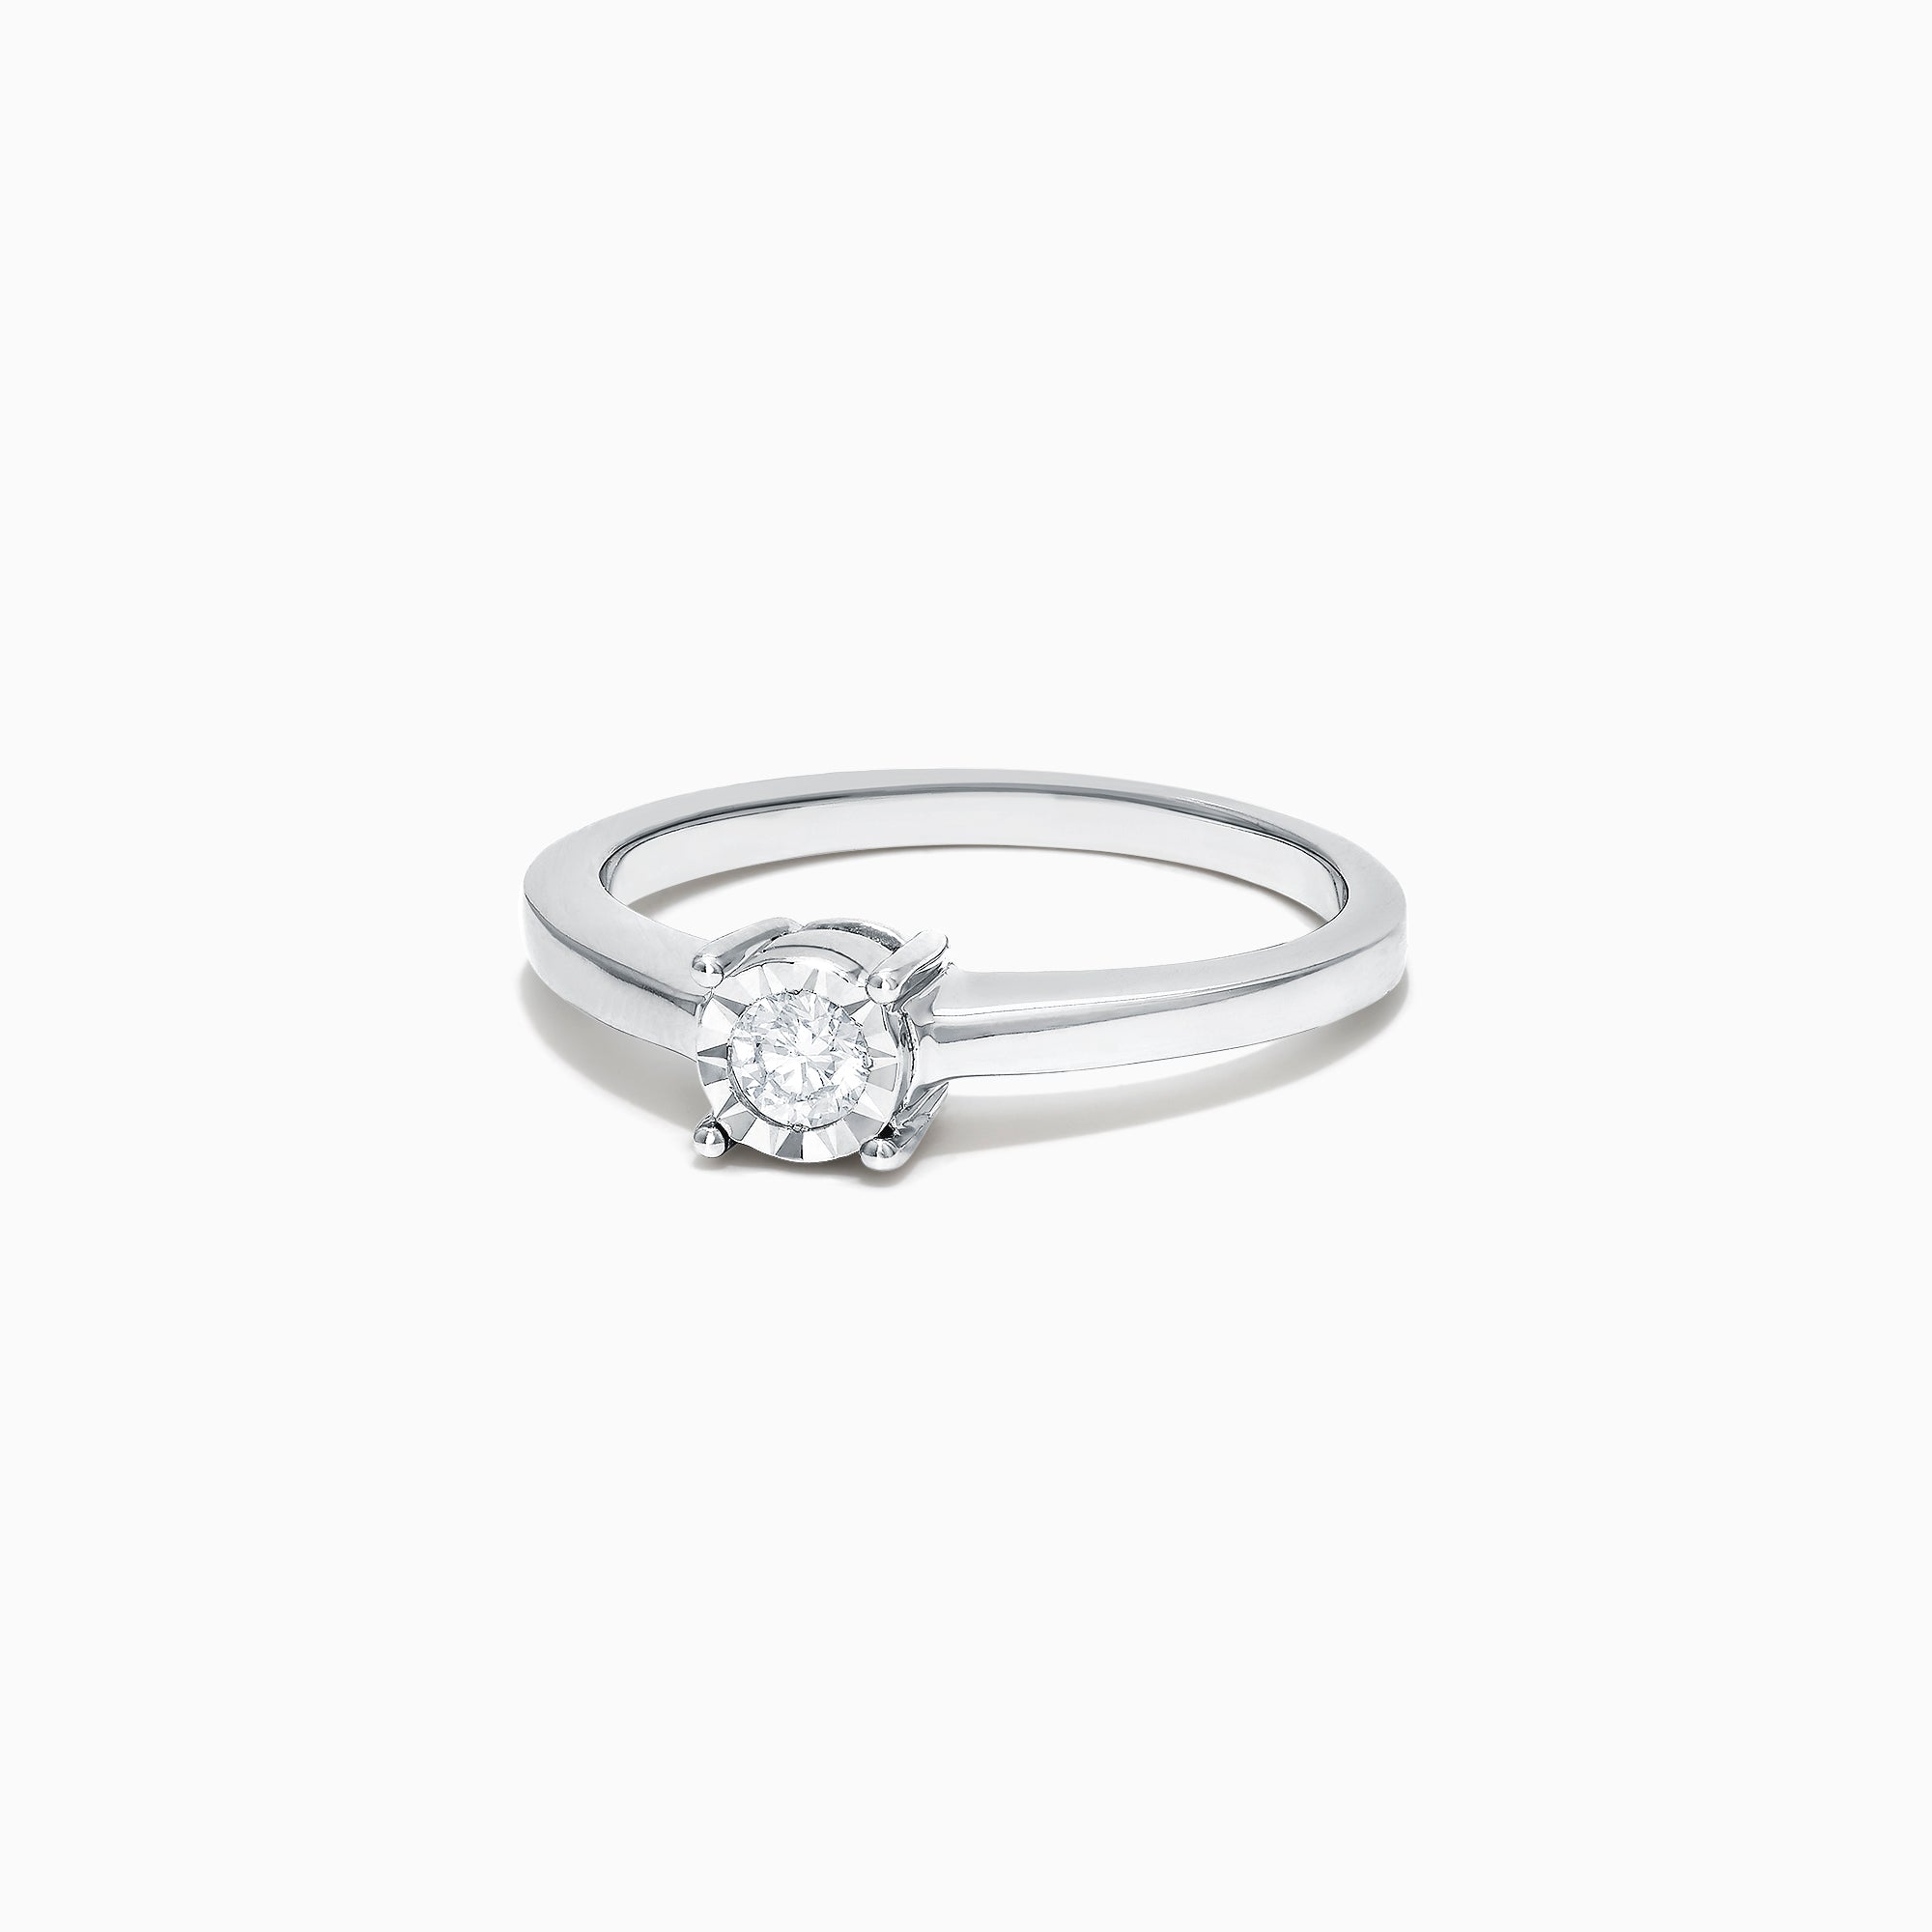 Effy Pave Classica 14K White Gold Diamond Ring, 0.15 TCW